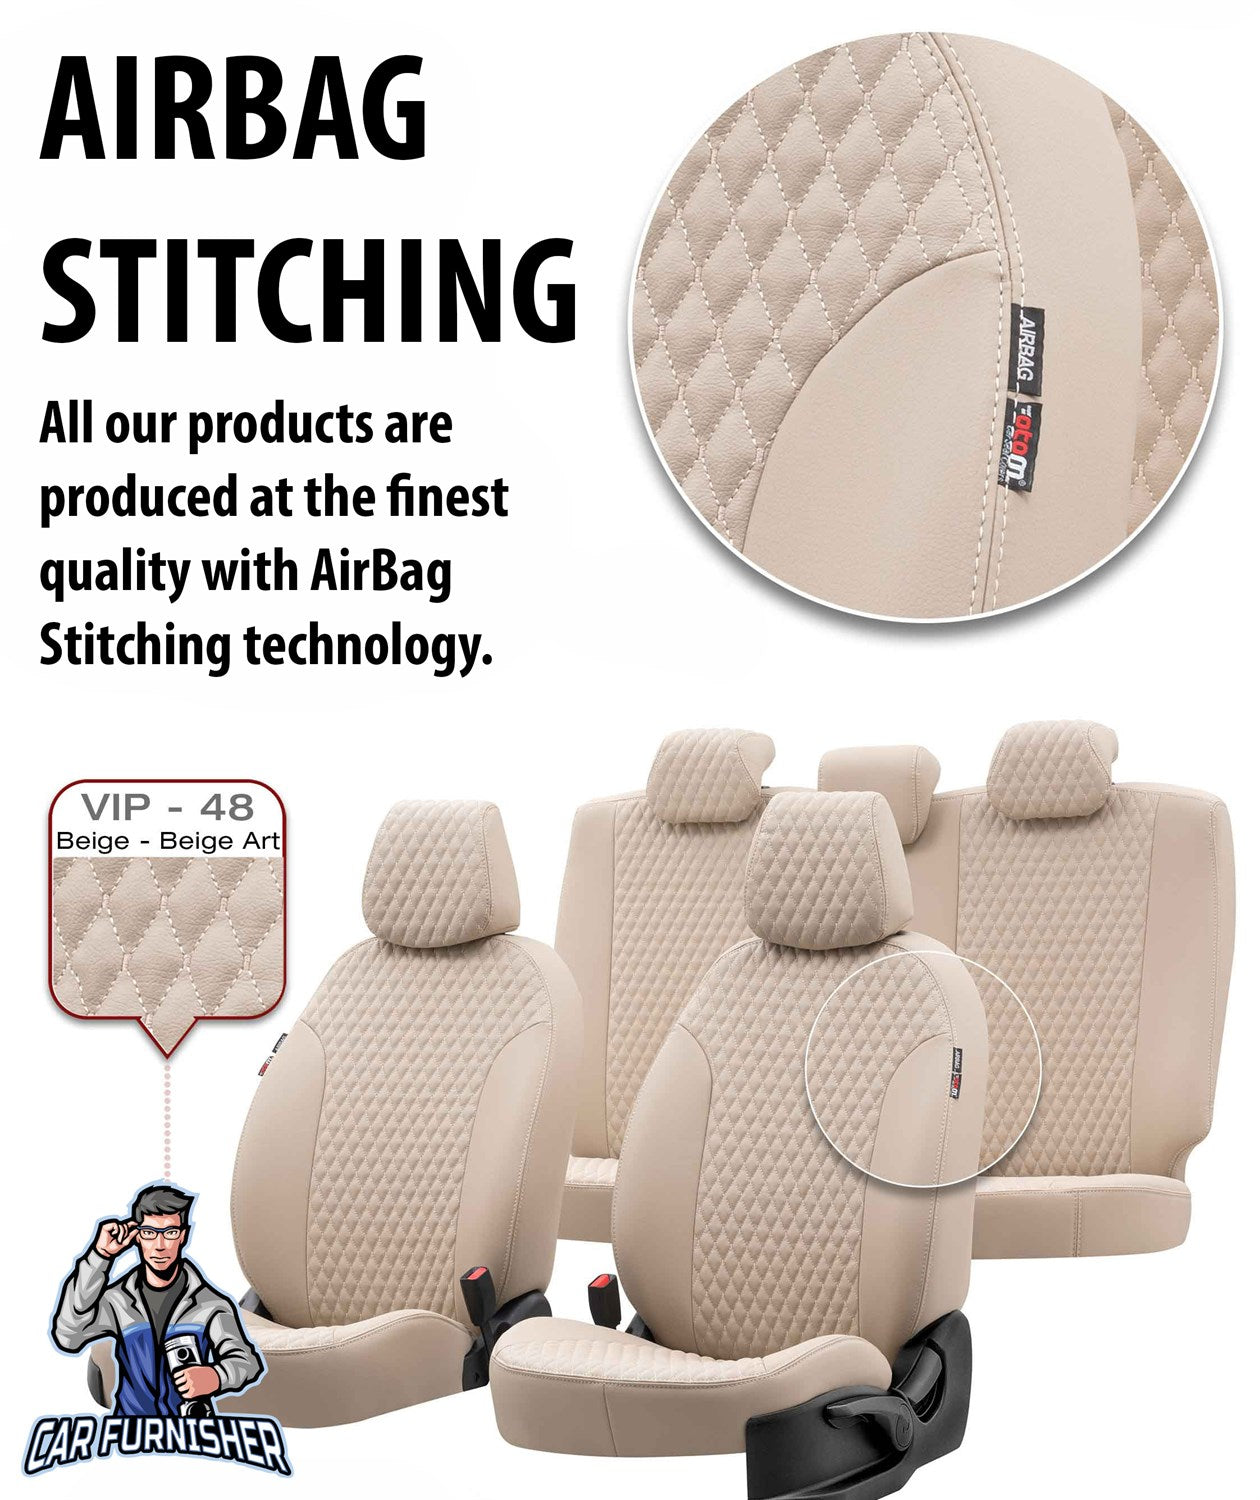 Daihatsu Terios Seat Covers Amsterdam Leather Design Beige Leather